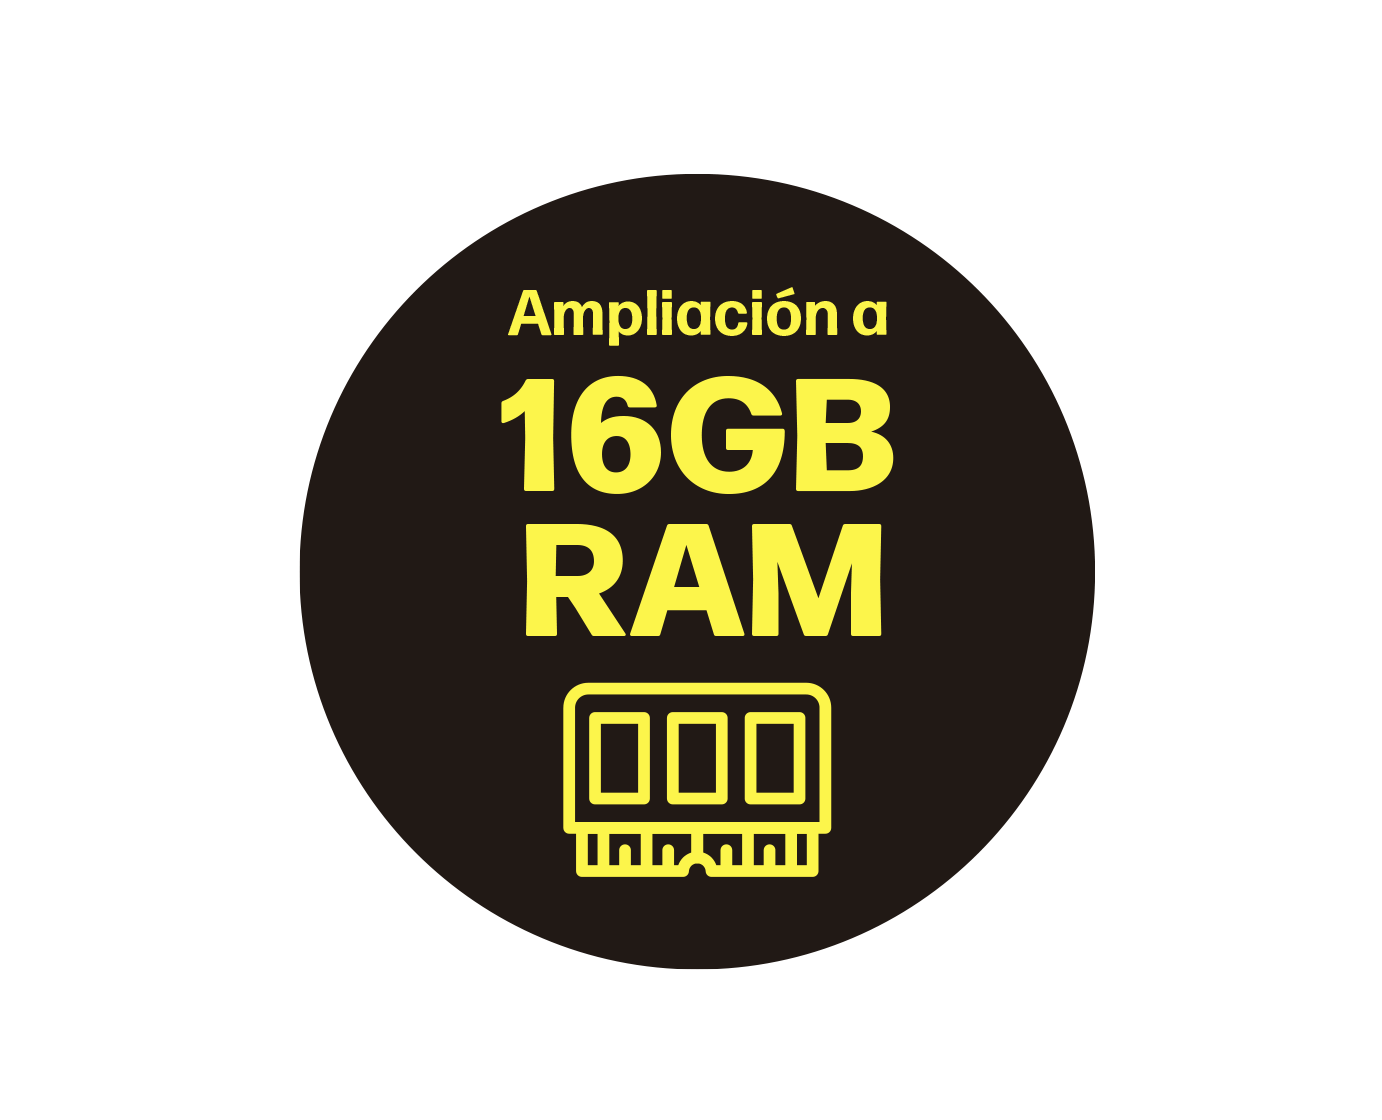 Portátiles con 16GB RAM